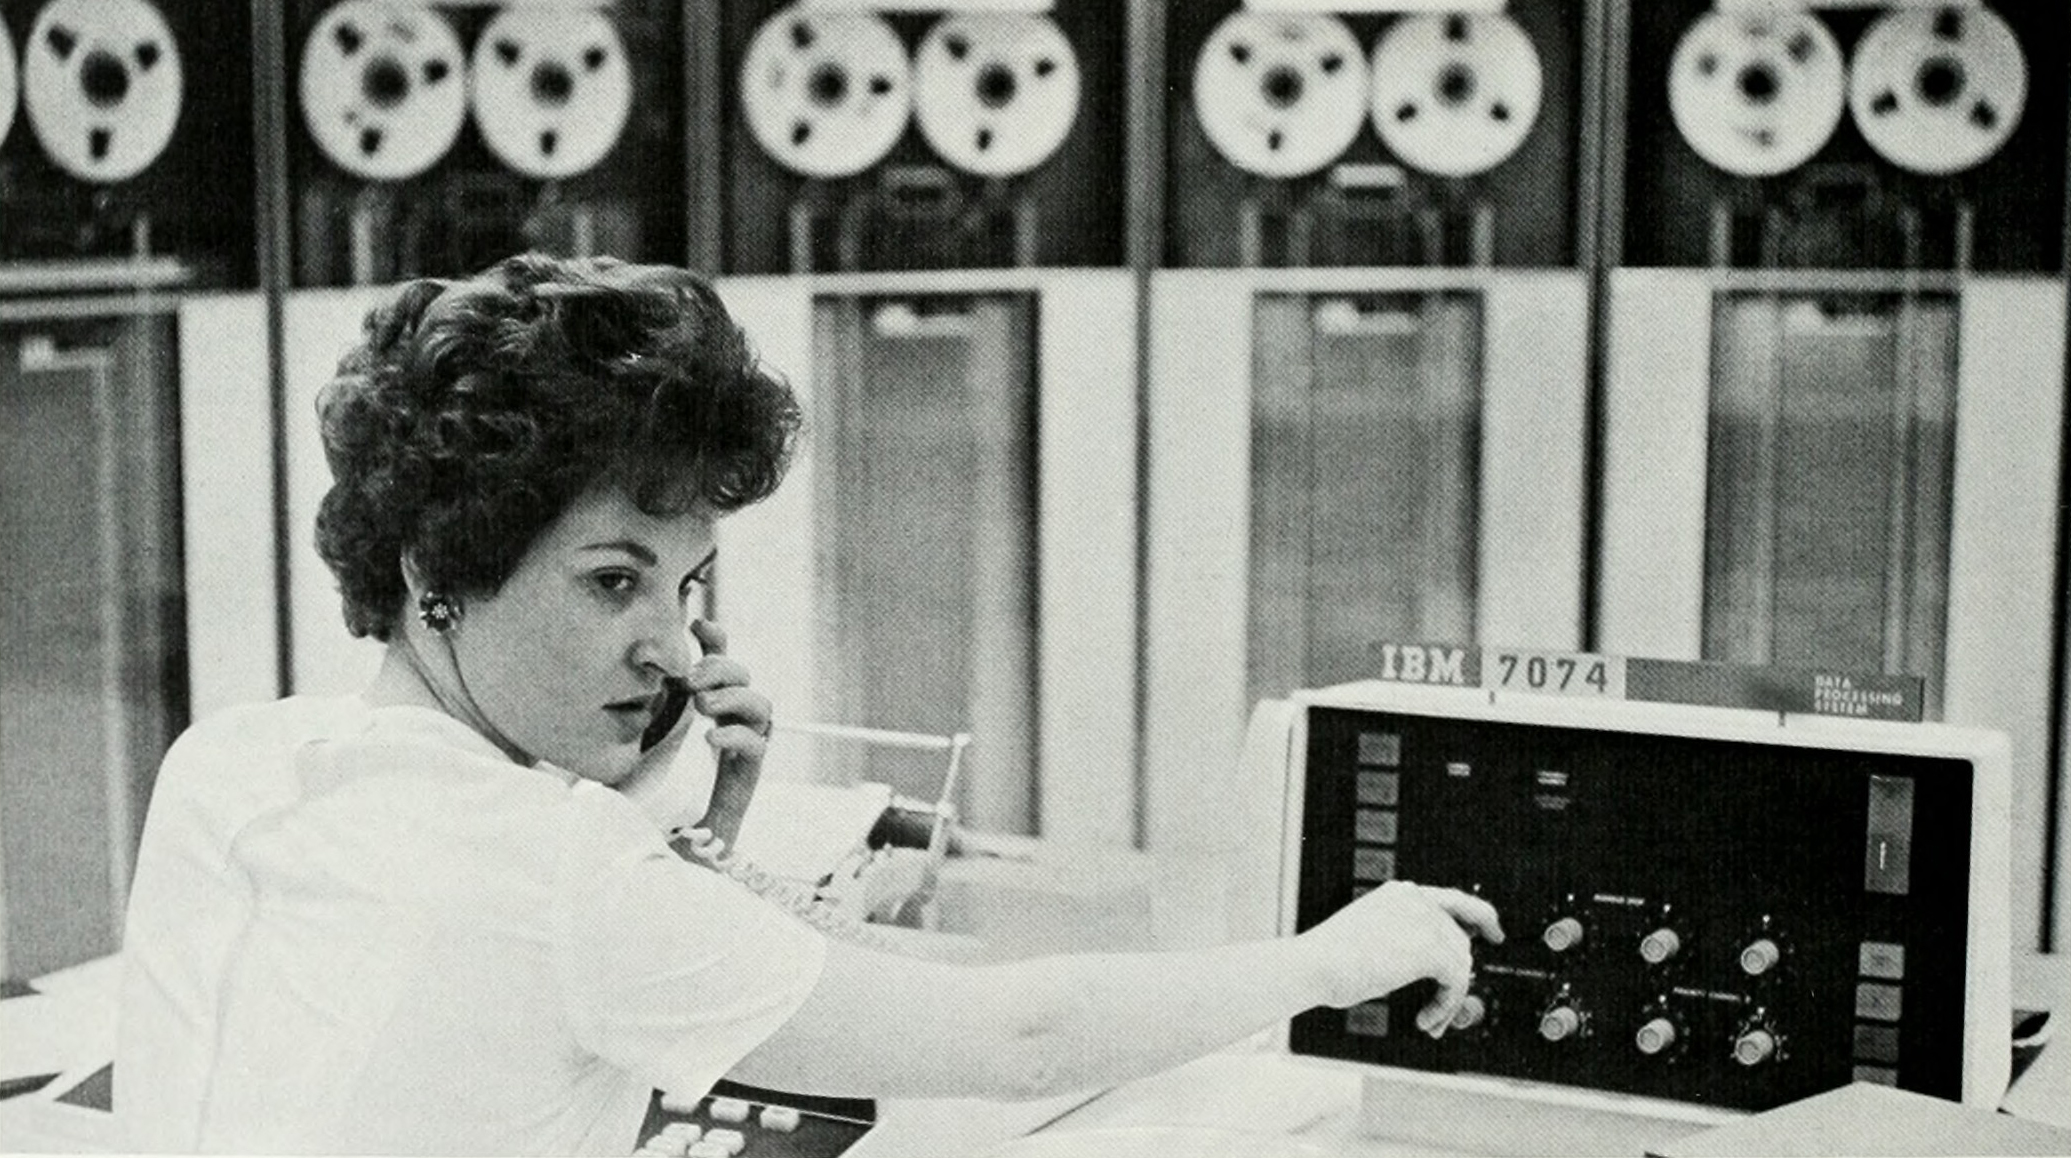 A woman making a phone call